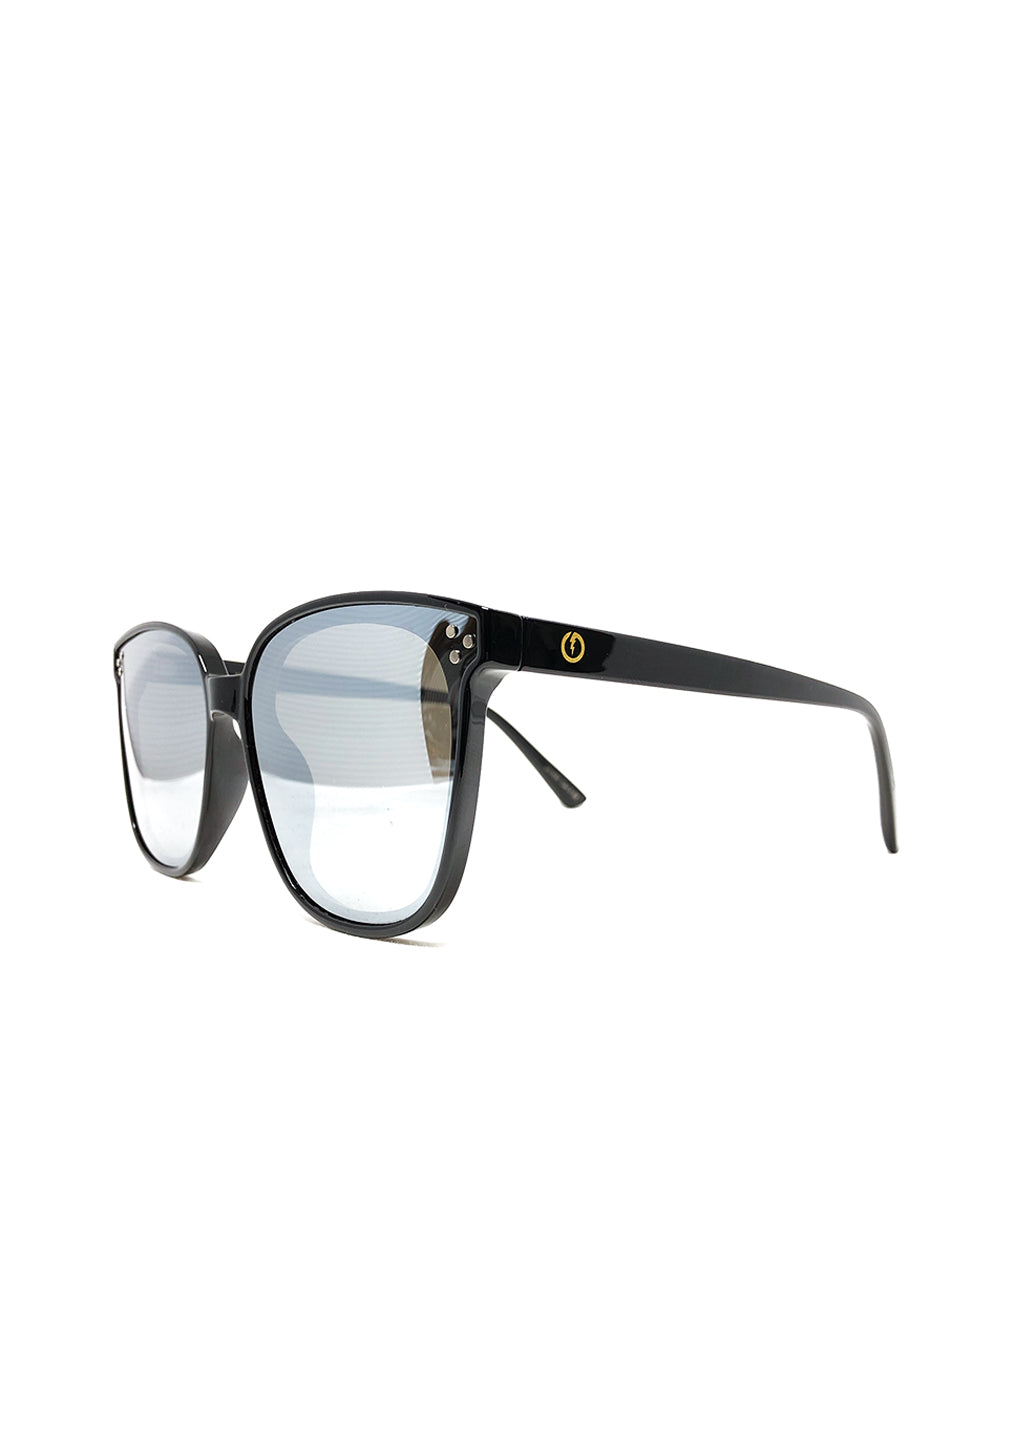 Iris Wayfarer sunglasses - Details